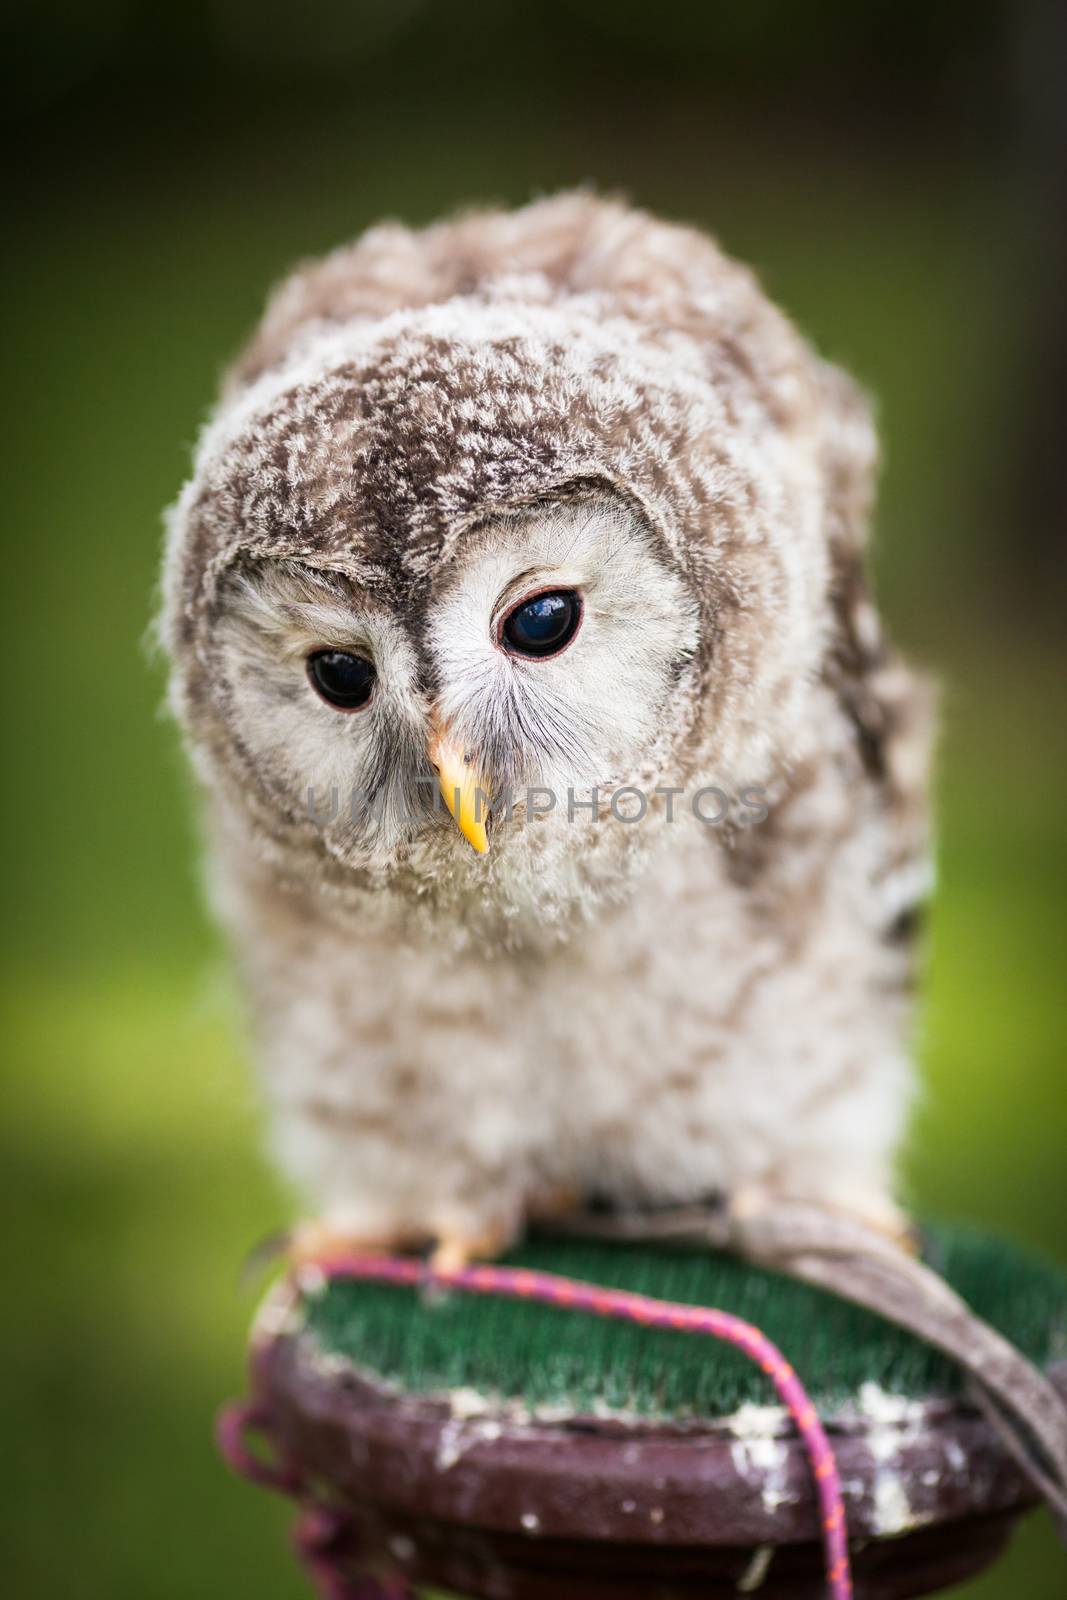 Close up of a baby Tawny Owl (Strix aluco)